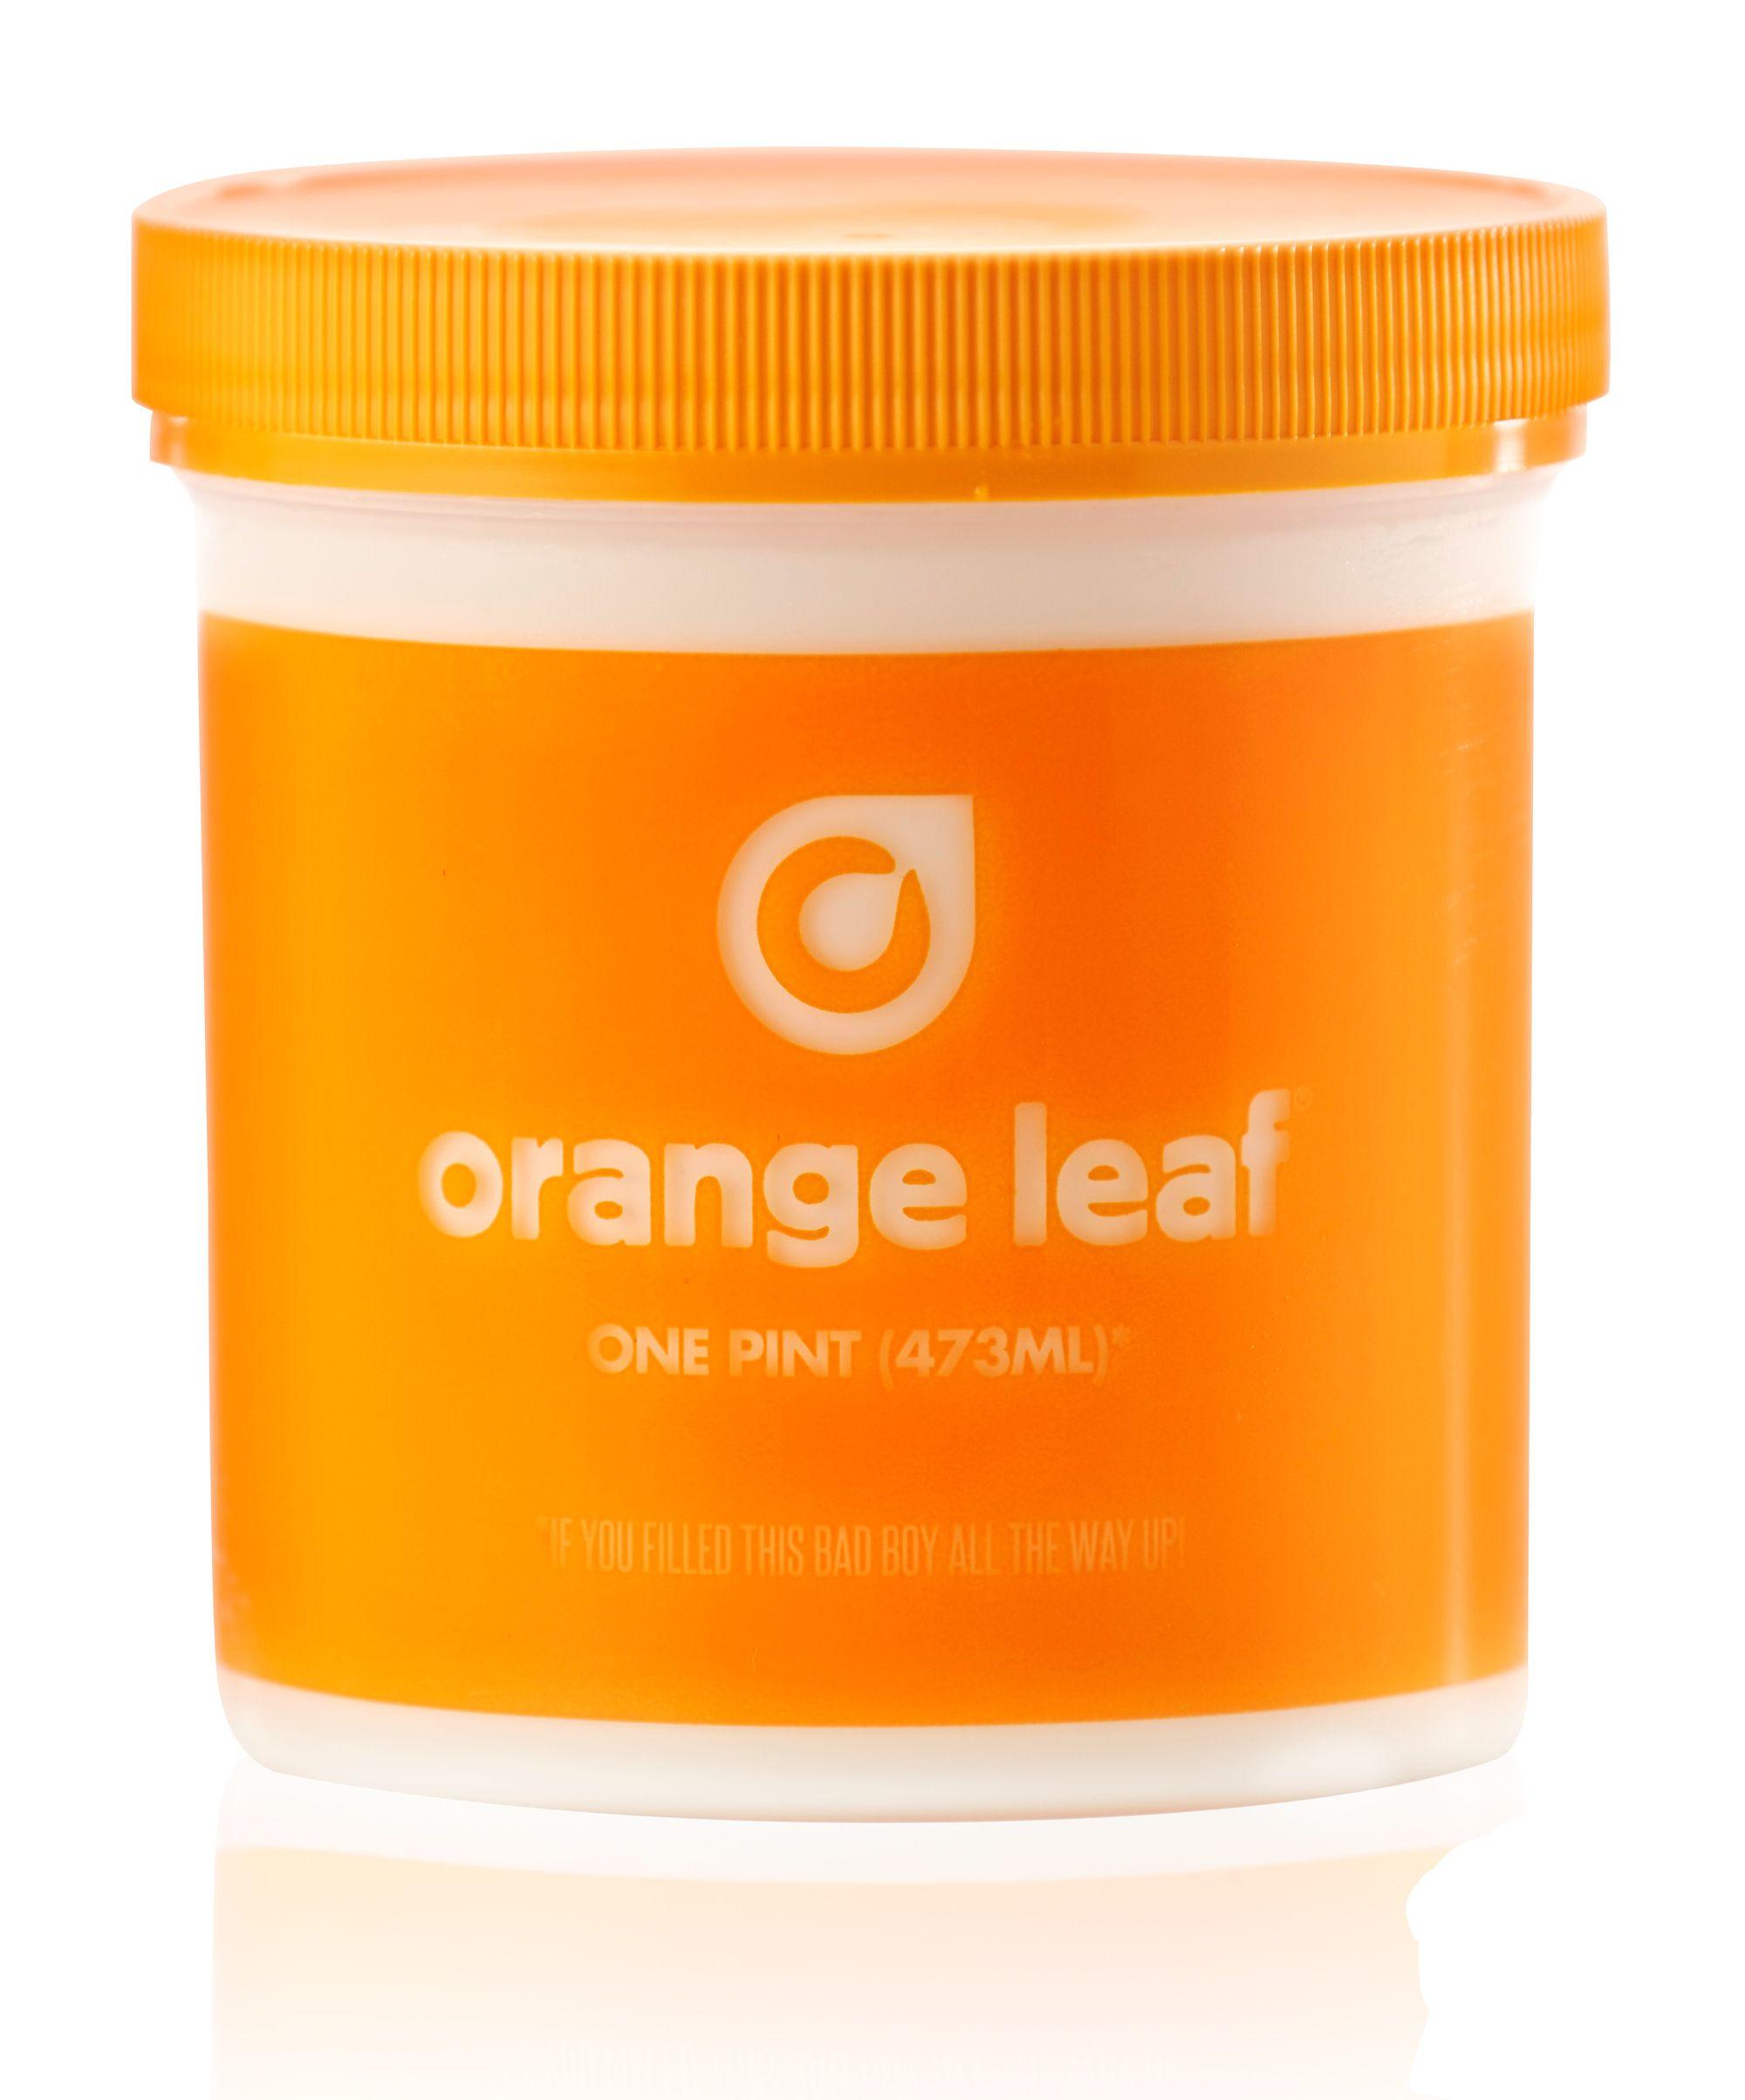 Orange Leaf Frozen Yogurt Logo - Orange Leaf Frozen Yogurt Launches Orange Leaf to Go | Business Wire